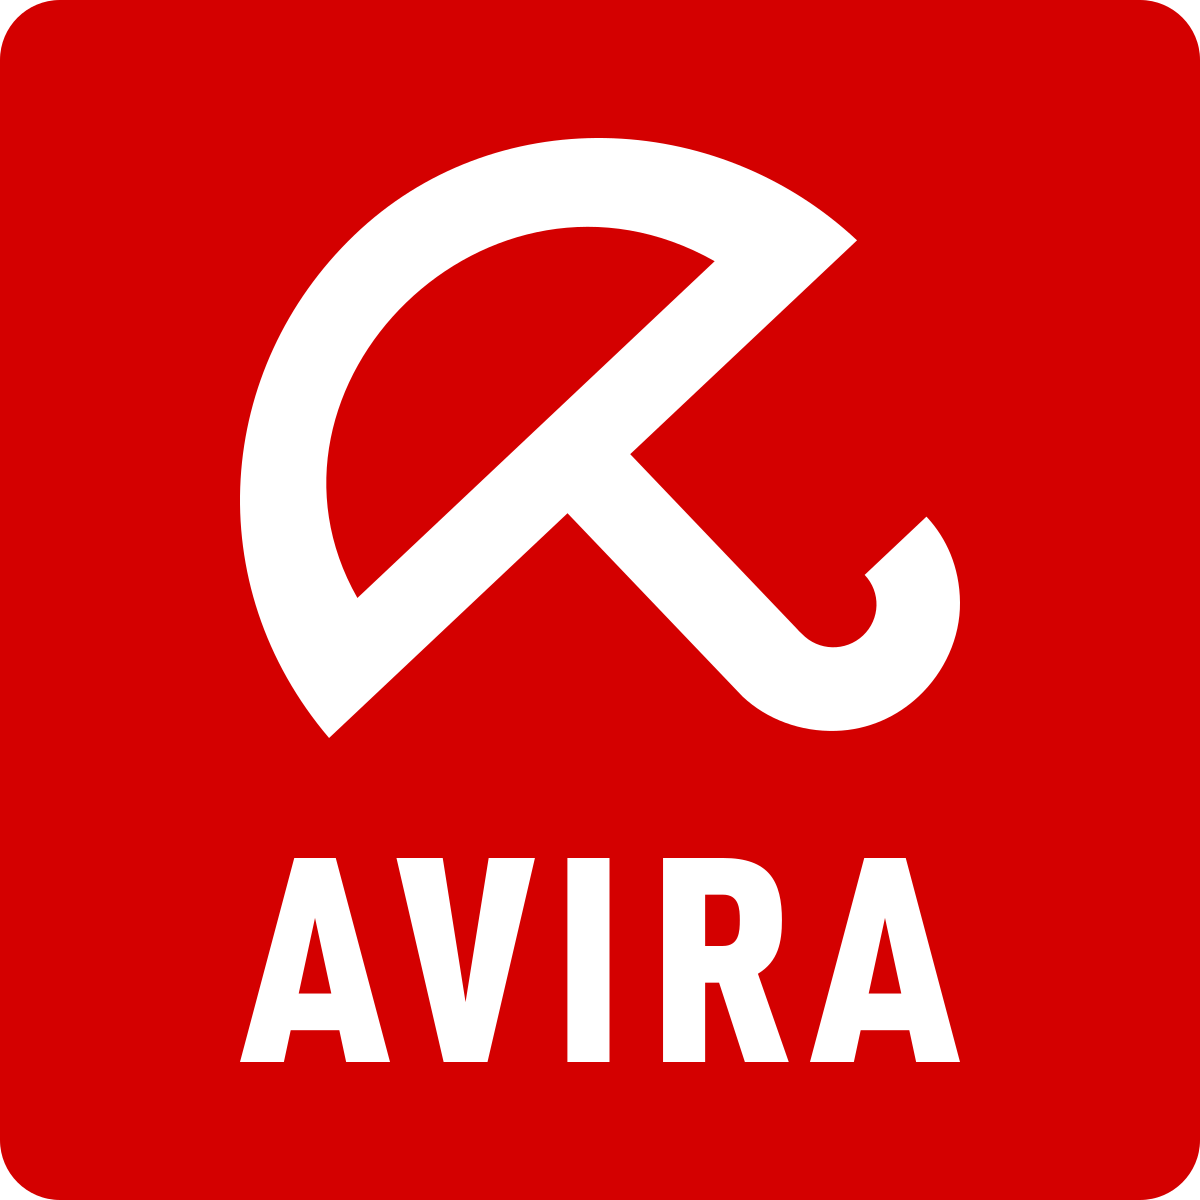 avira computer download with keygen